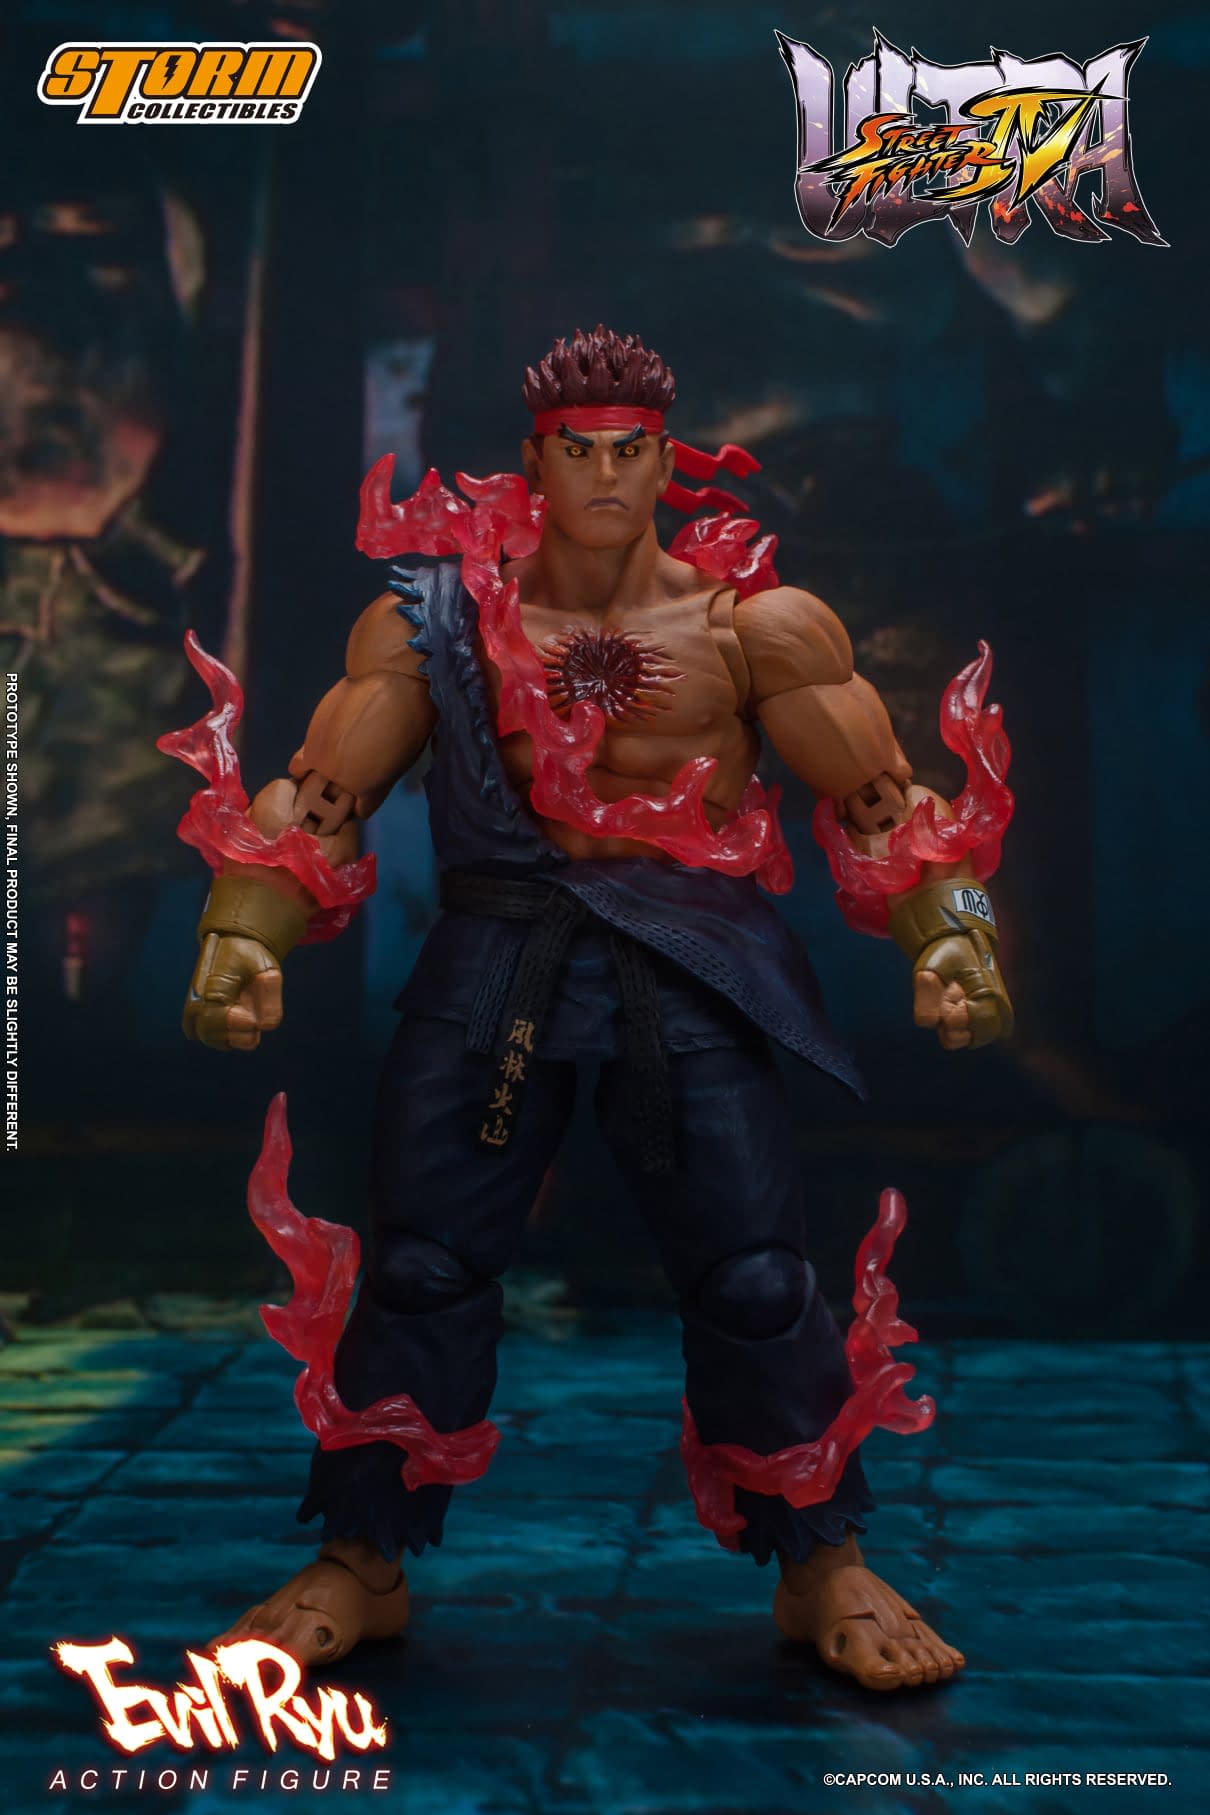 Evil Ryu, hadoken, Street Fighter Alpha 3, Super Street Fighter IV